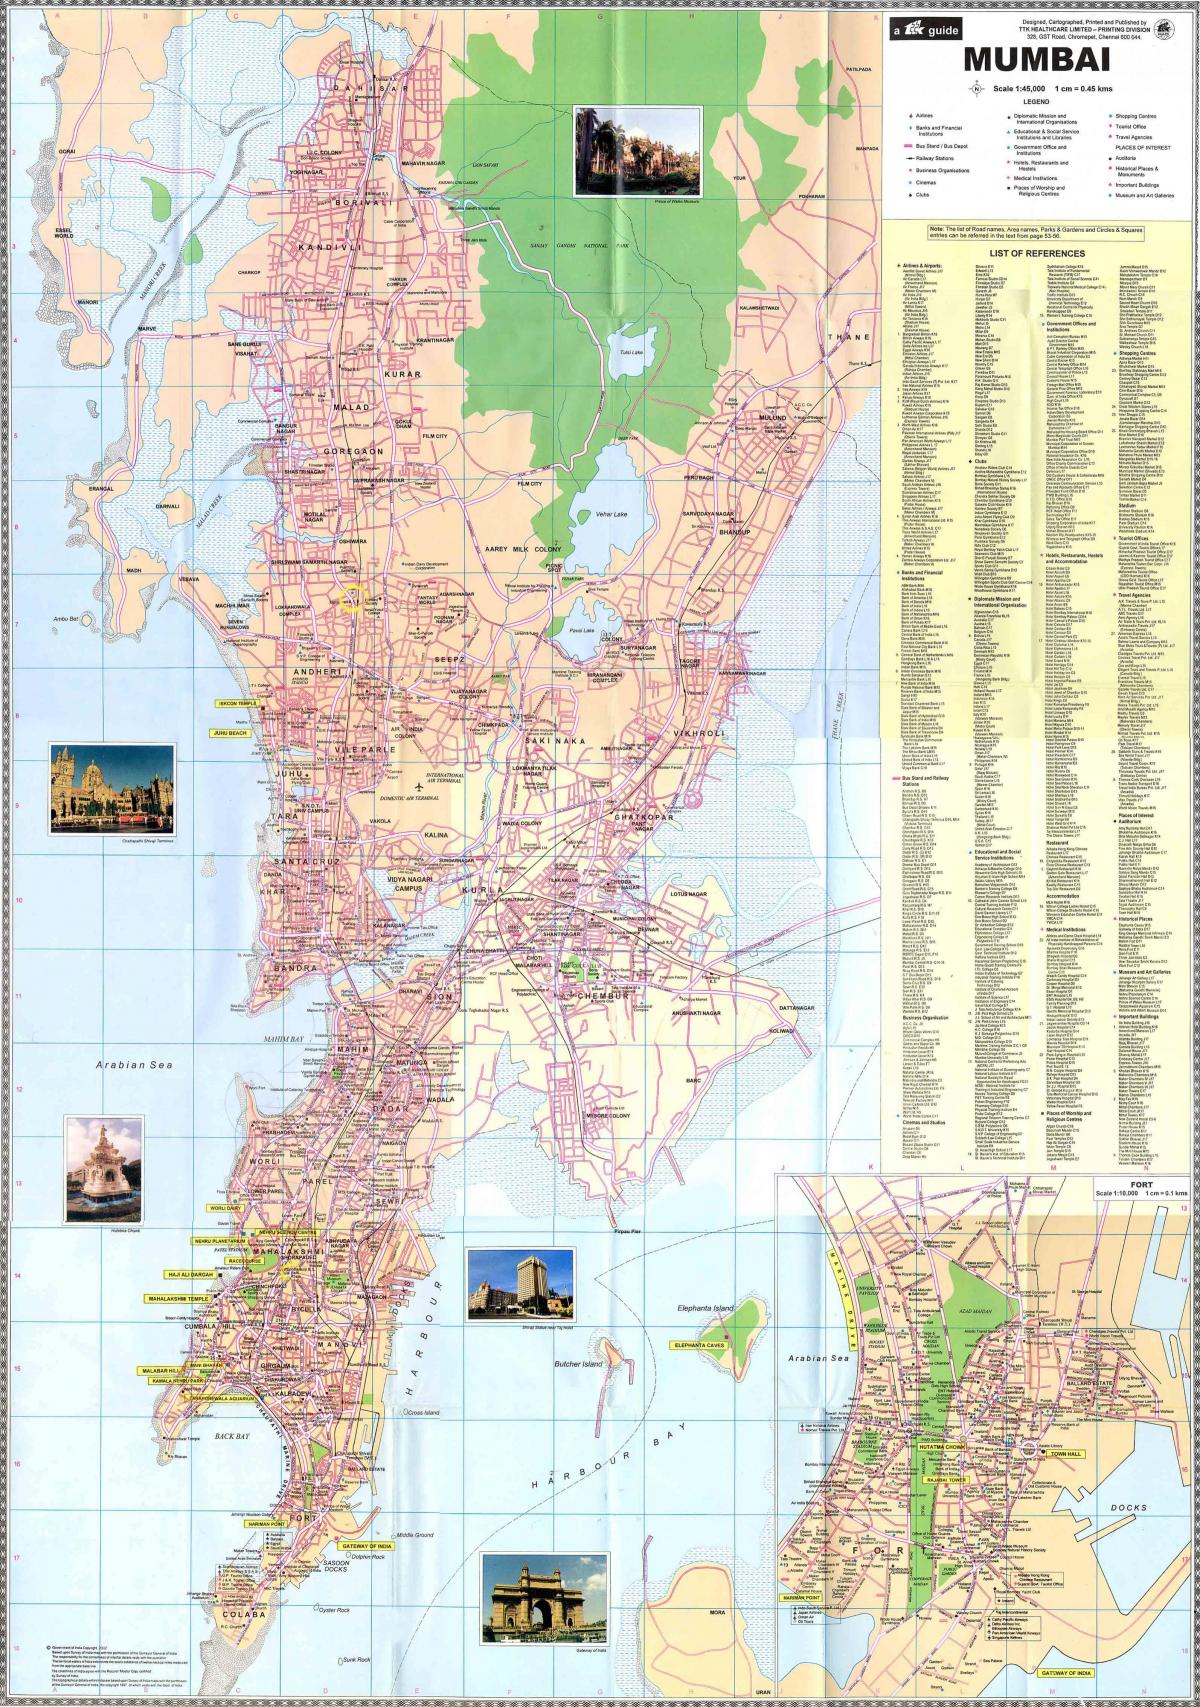 Mumbai - Bombay Stadtzentrum Karte